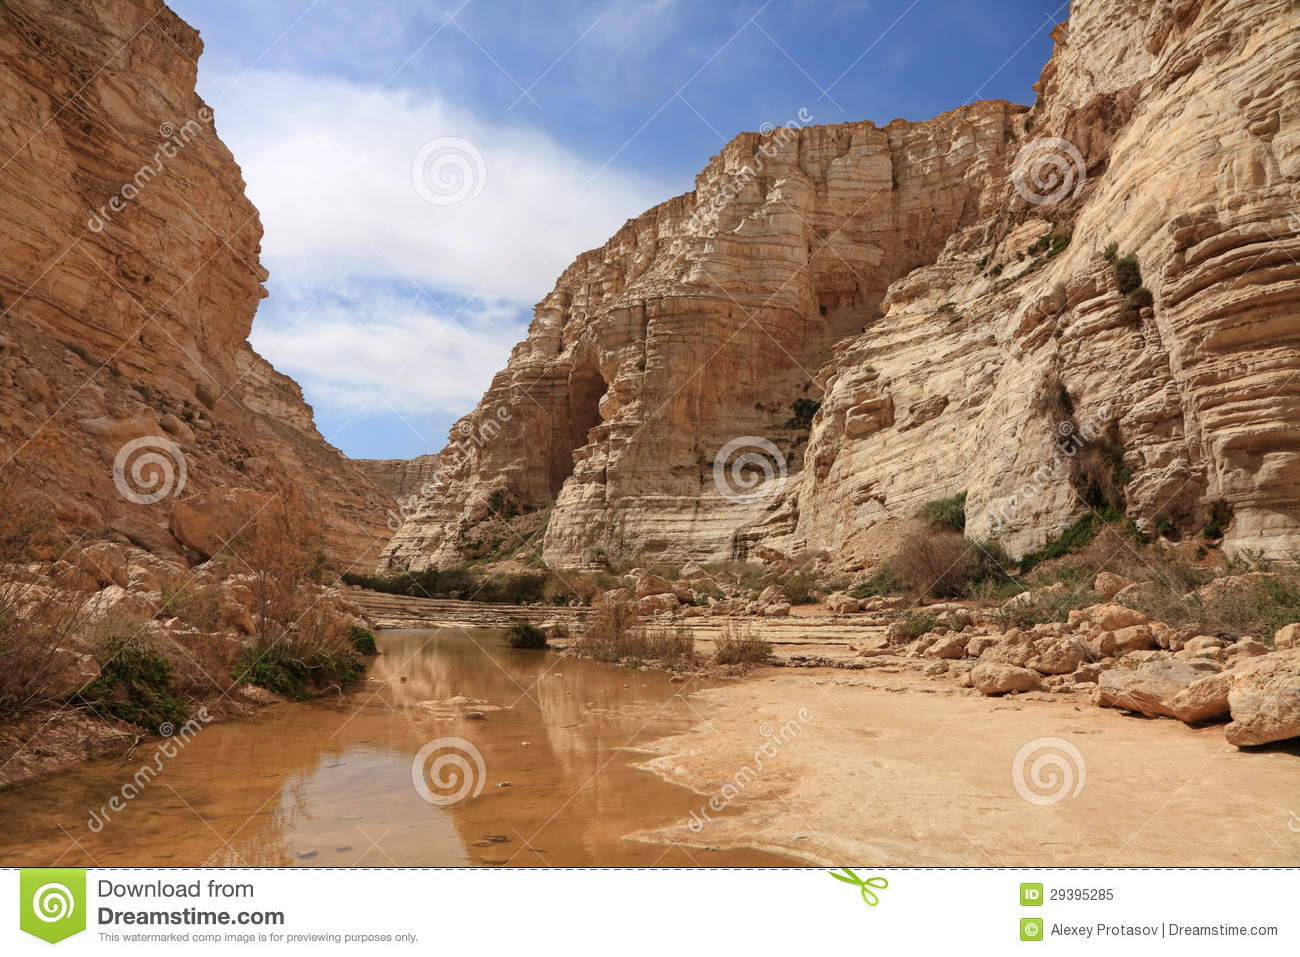 Canyon In Stony Desert Royalty Free Stock Photo   Image  29395285